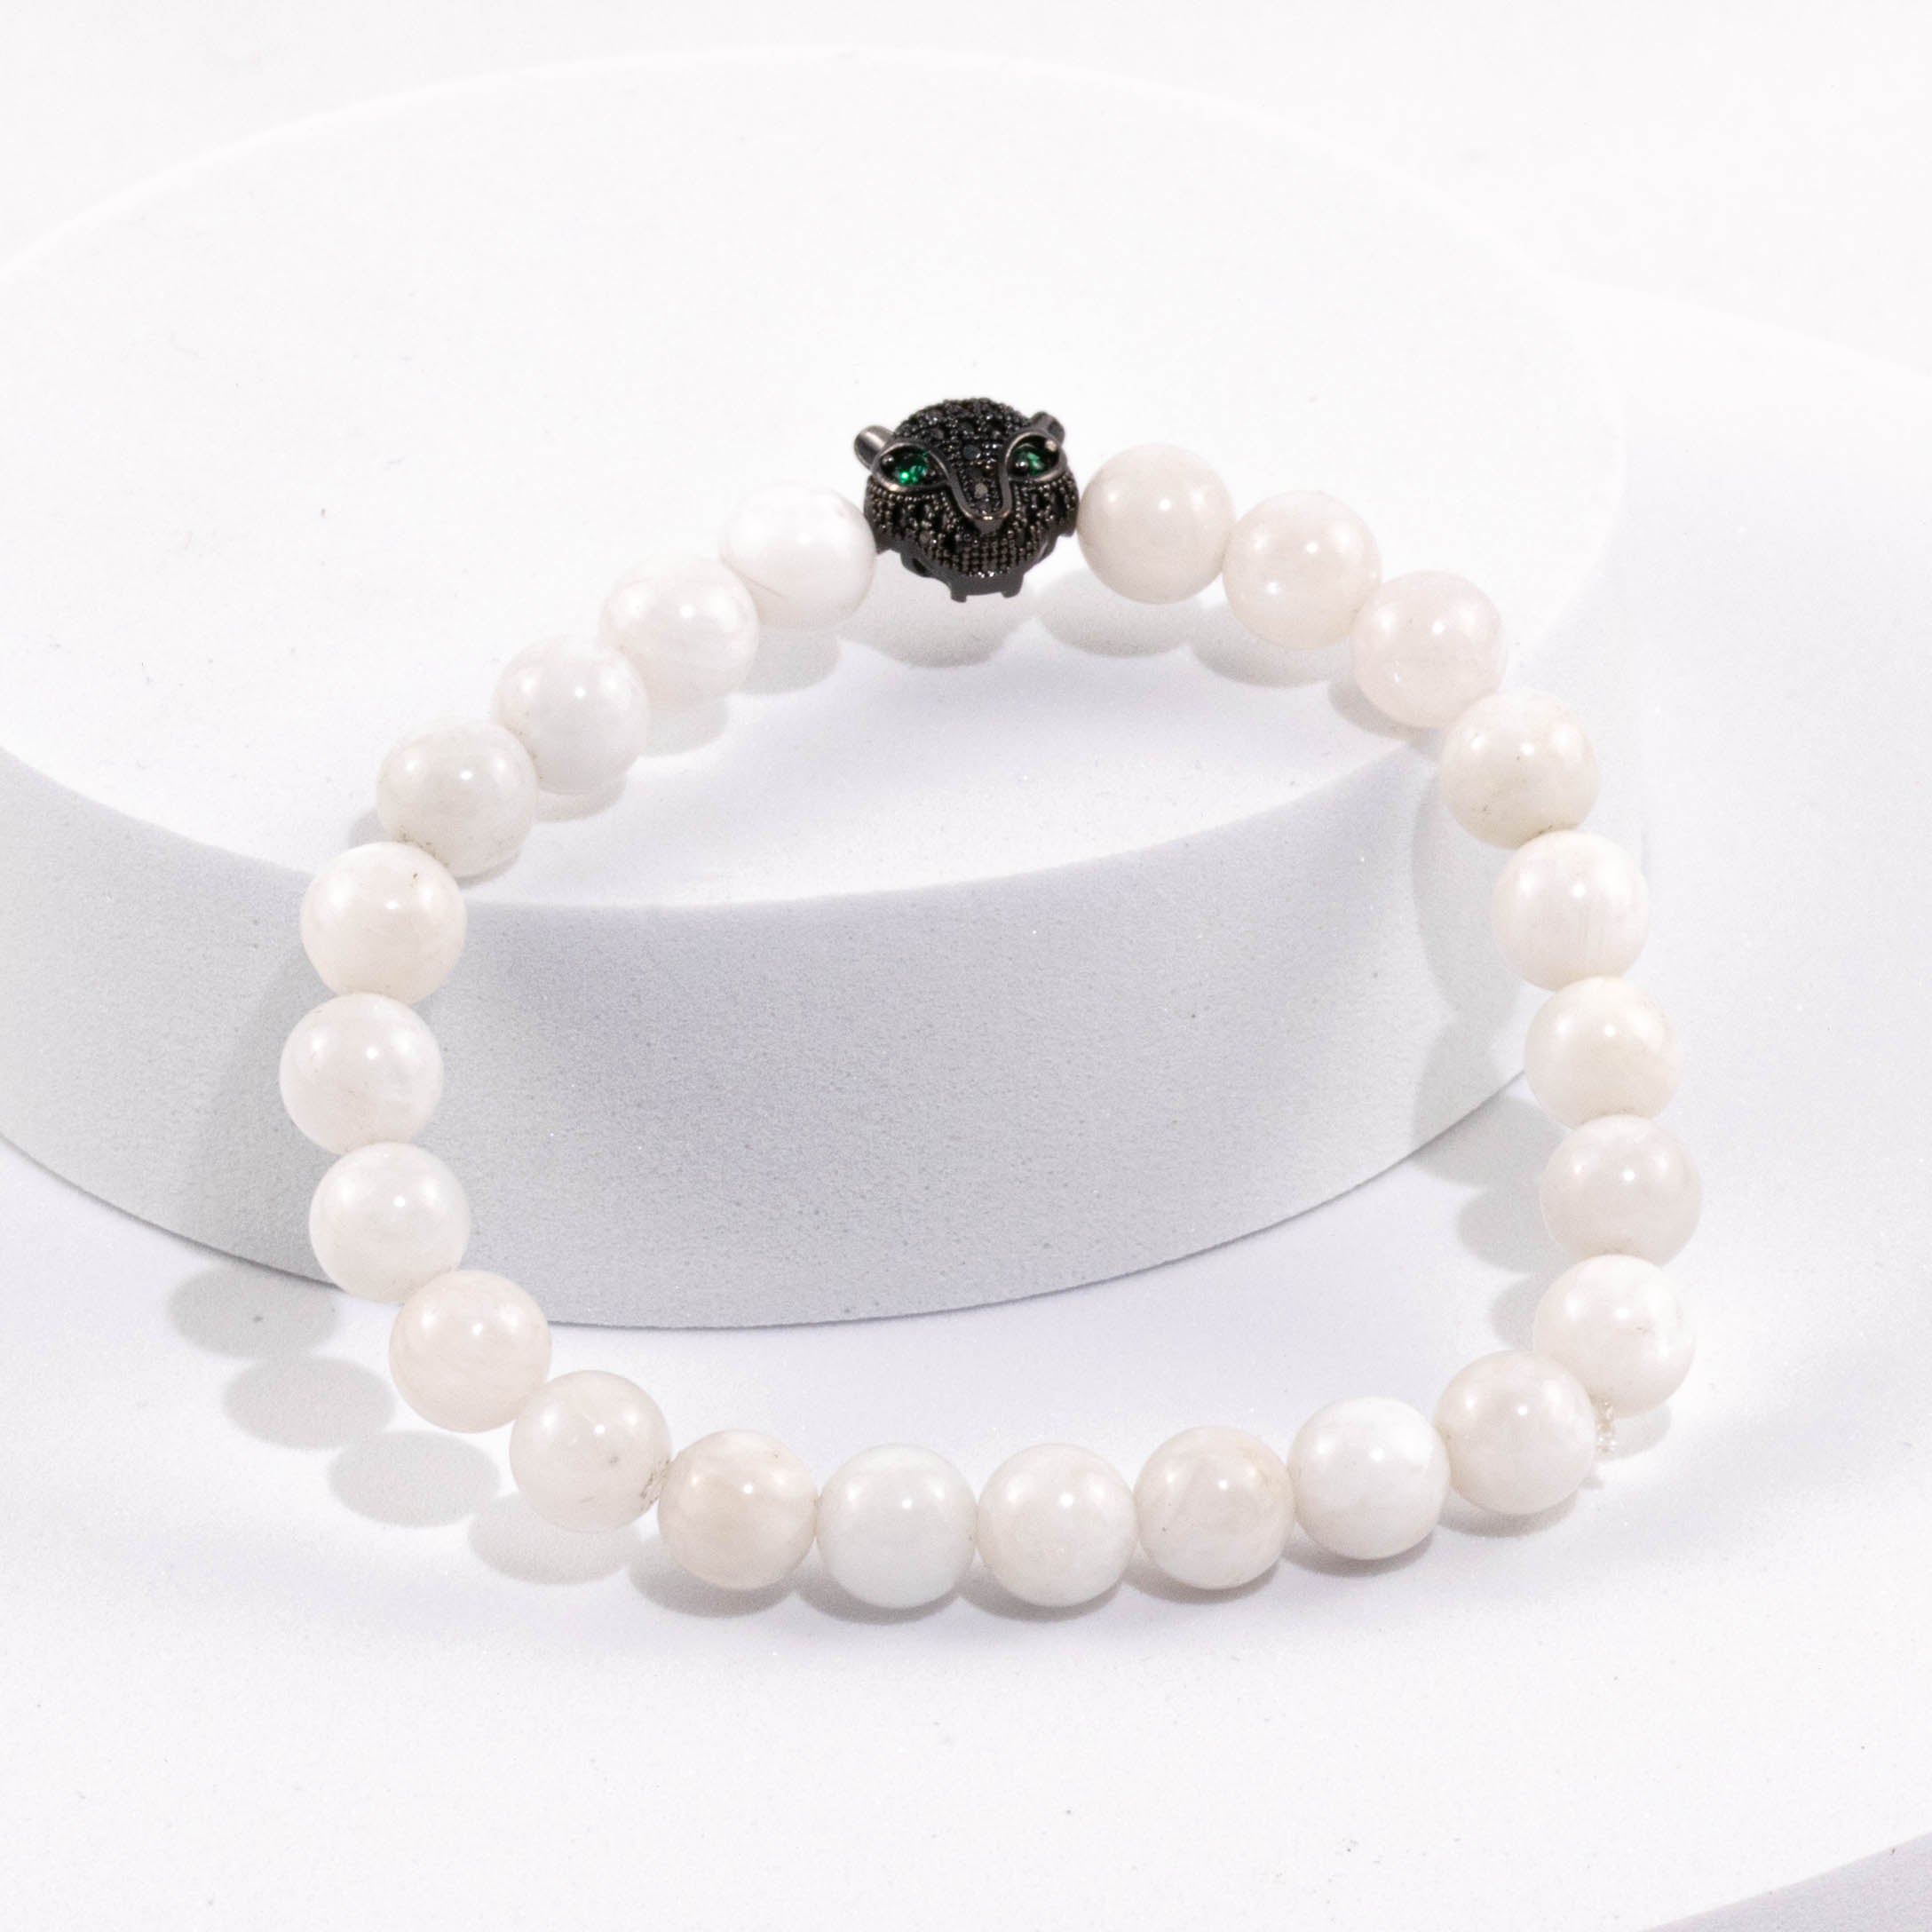 Moonstone Bracelet with Animal charm for Growth & Balance